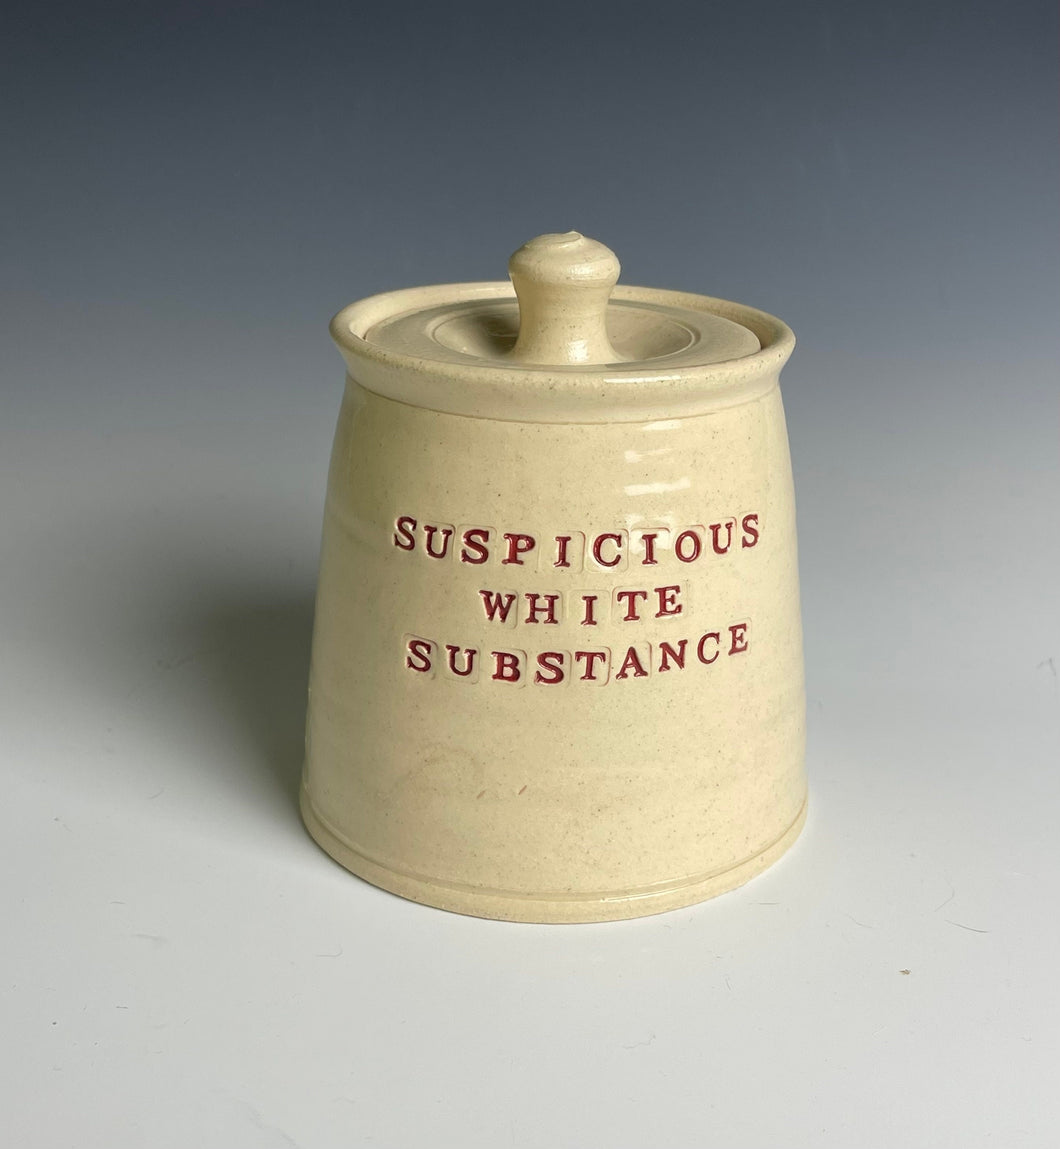 Suspicious white substance jar.